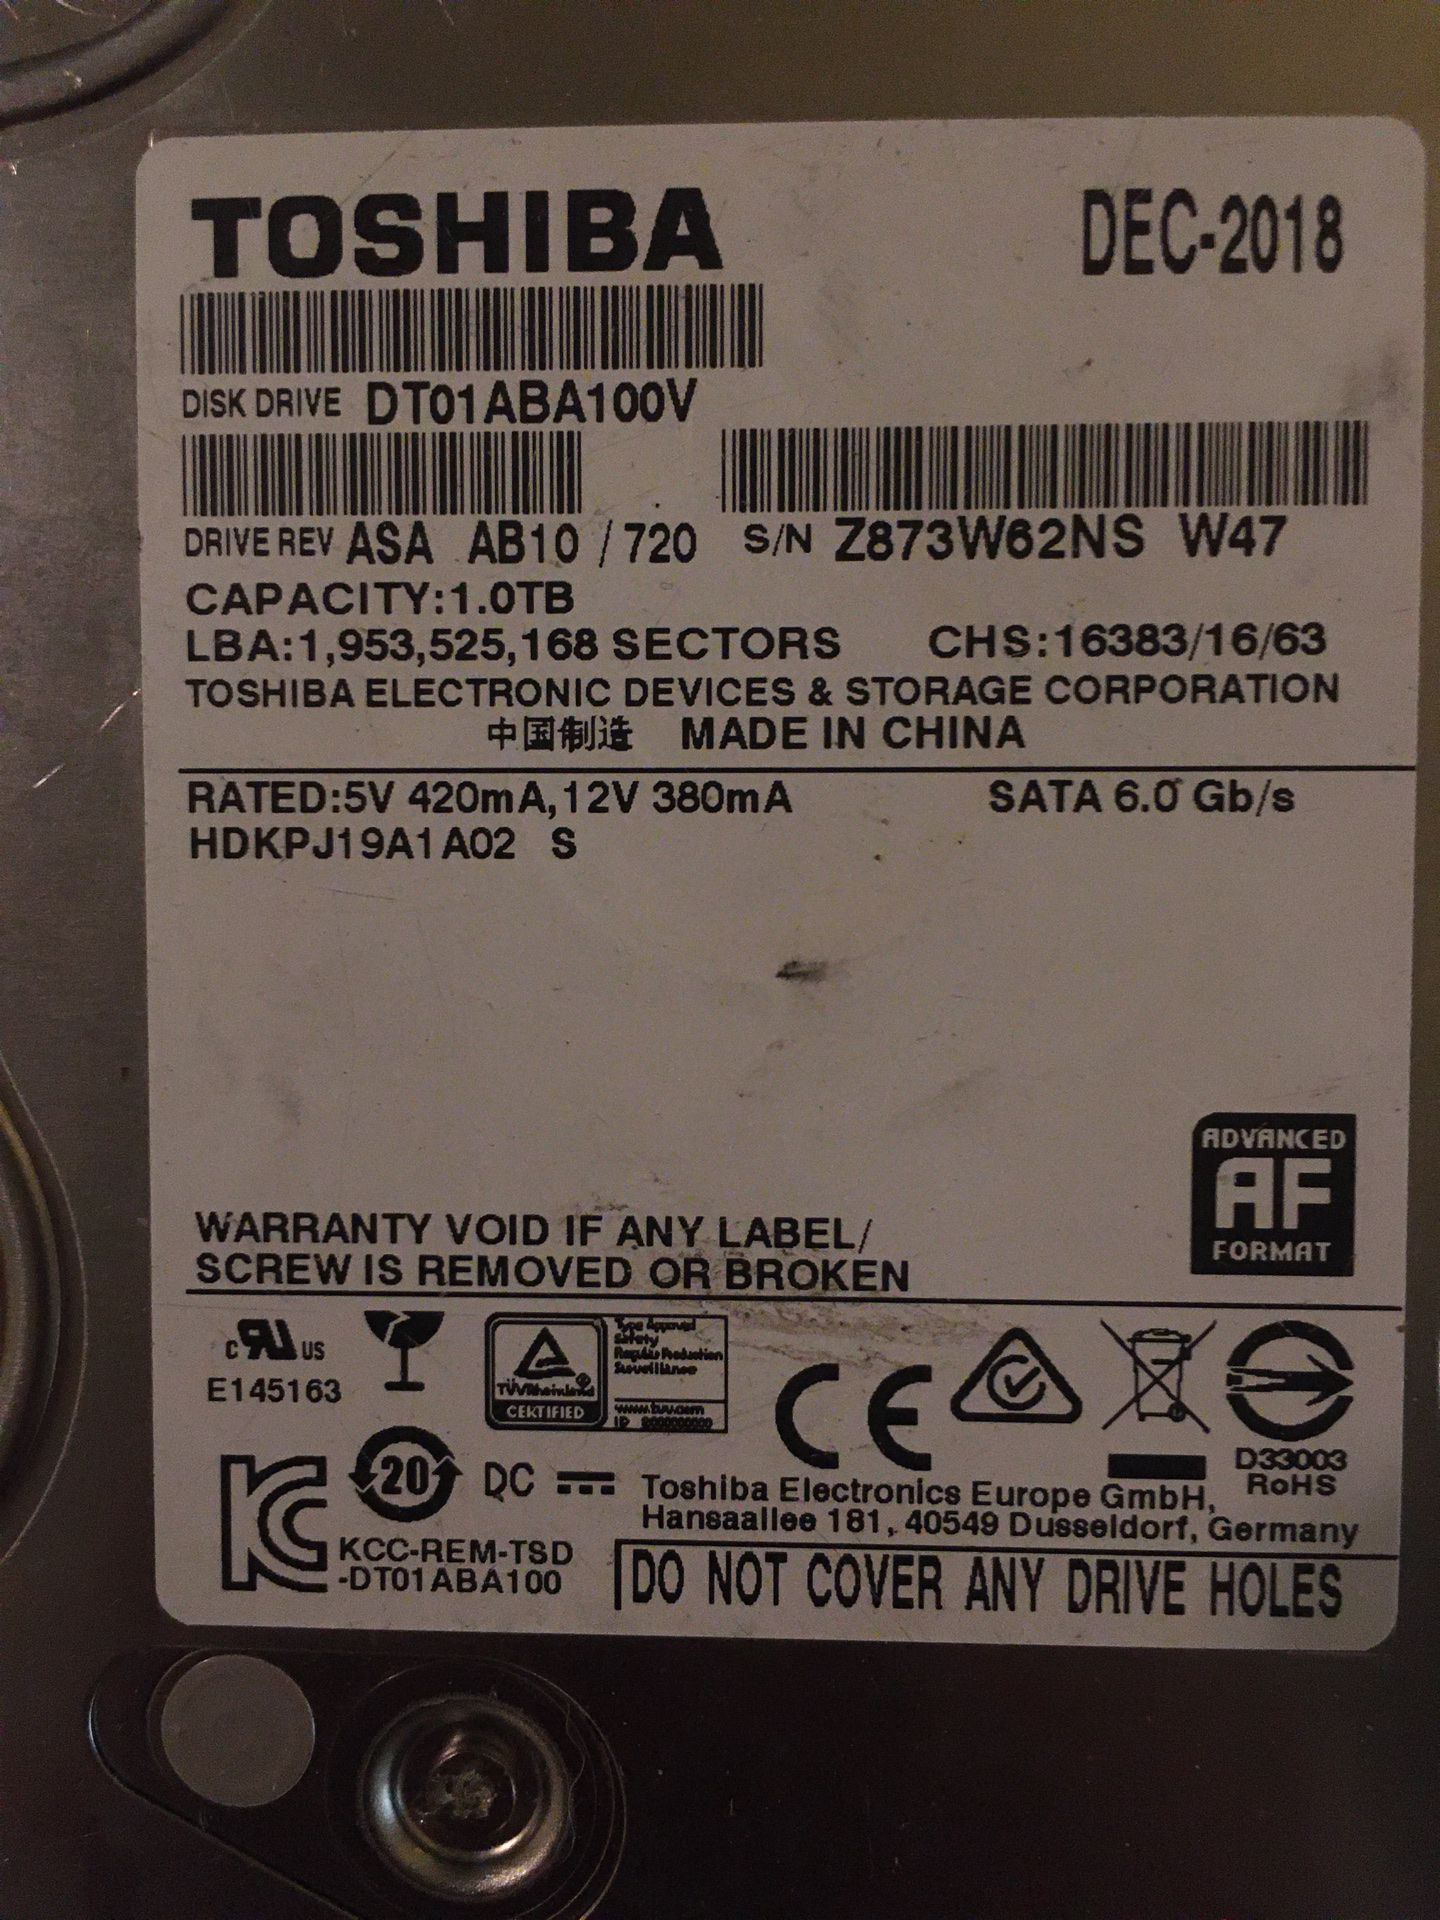 Part No: DT01ABA100 - Toshiba 1TB 5700RPM SATA 6GB/s 32MB Cache 3.5-inch Hard Disk Drive